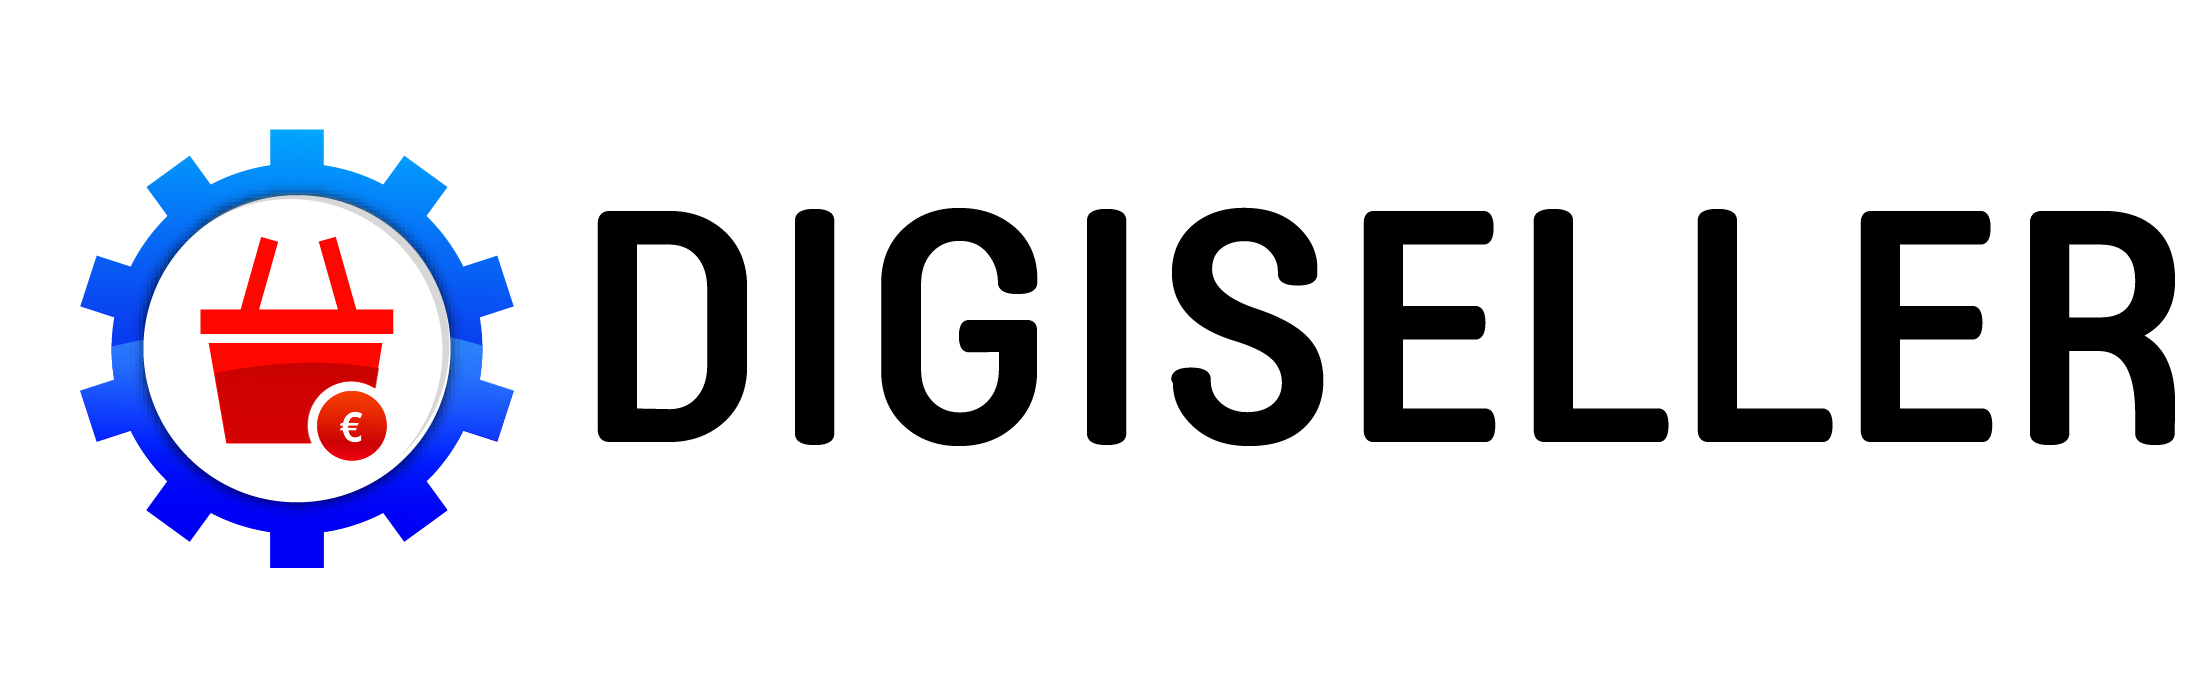 Https digiseller market. Digiseller логотип. Diseller франшиза. Чат digiseller. Дигиселлер фото.